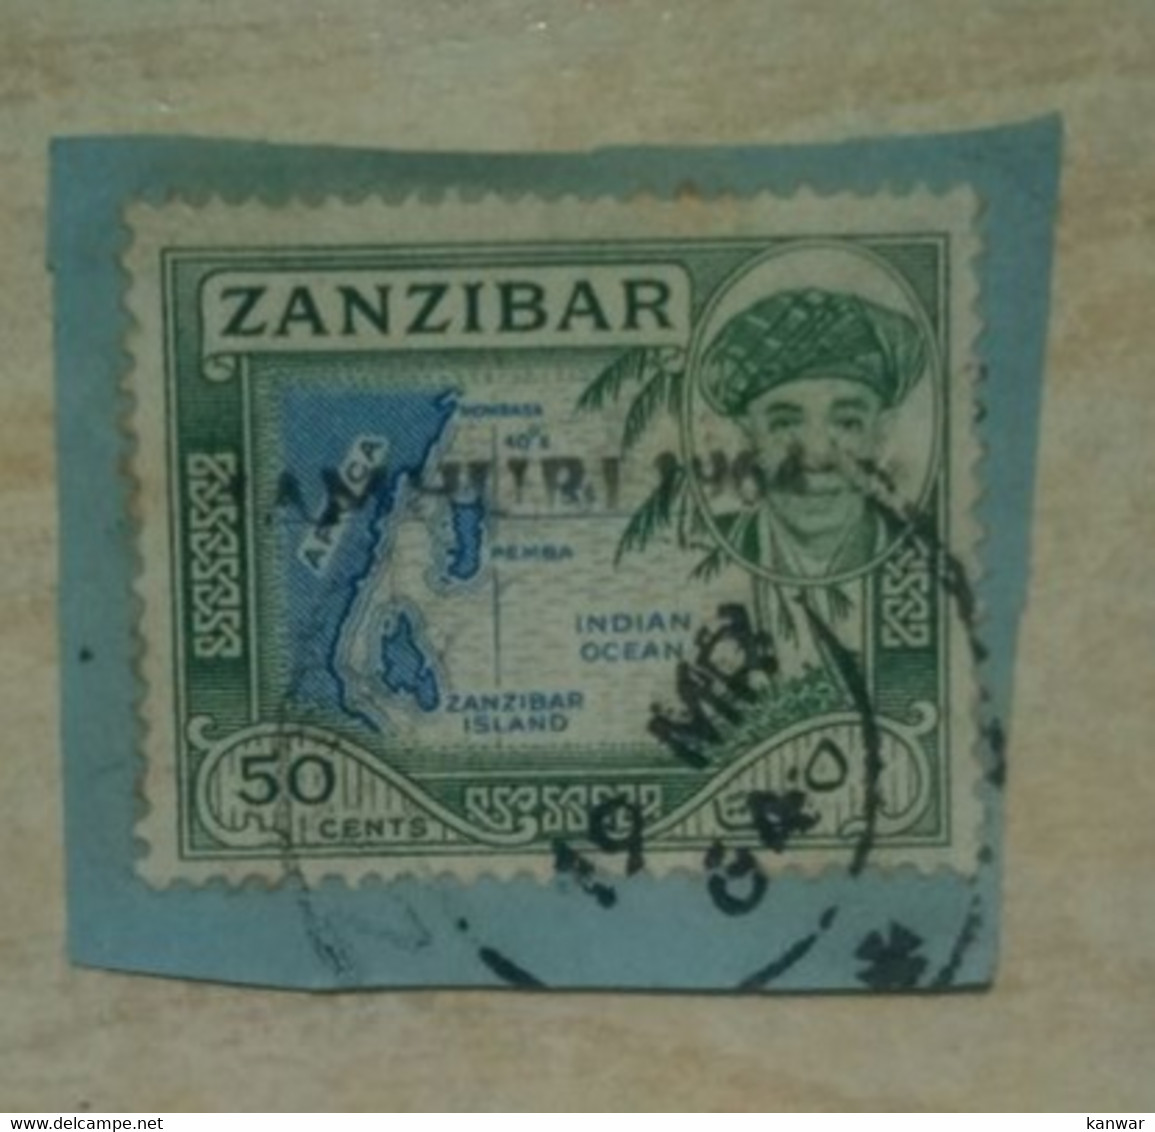 1964 ZANZIBAR OLD STAMP ON PAER LOT OF 2 STAMPS - Zanzibar (1963-1968)